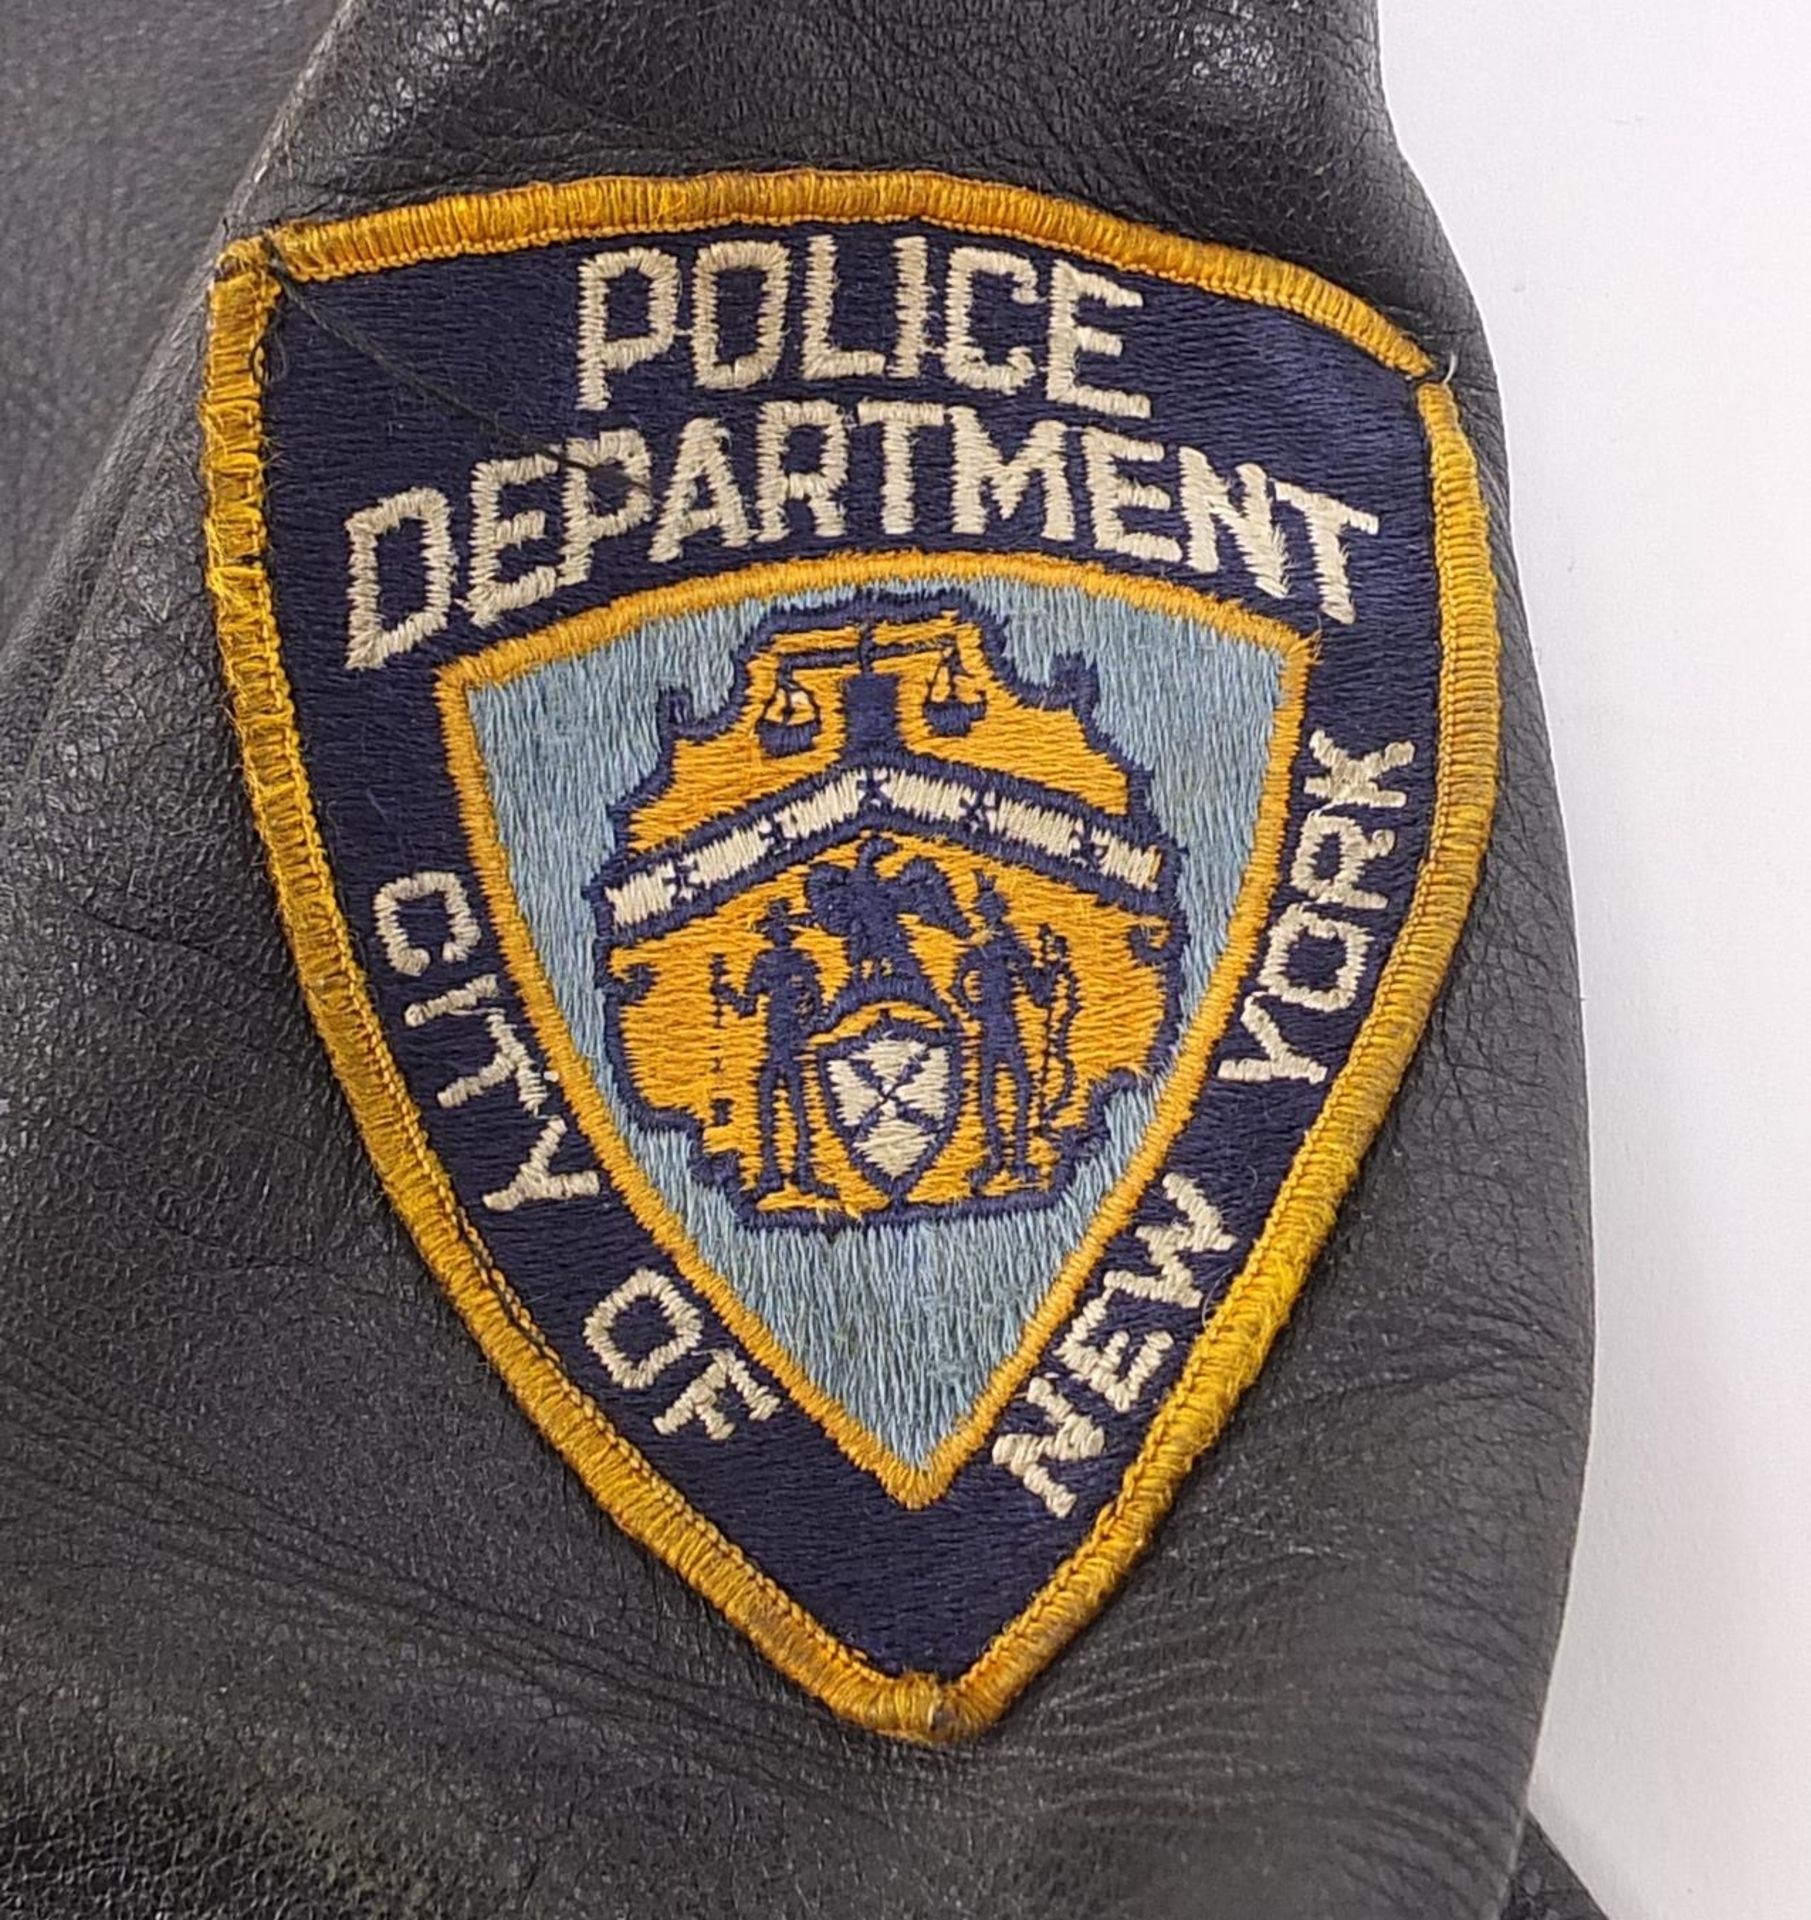 Vintage NYPD Eisenhower leather jacket - Image 3 of 3